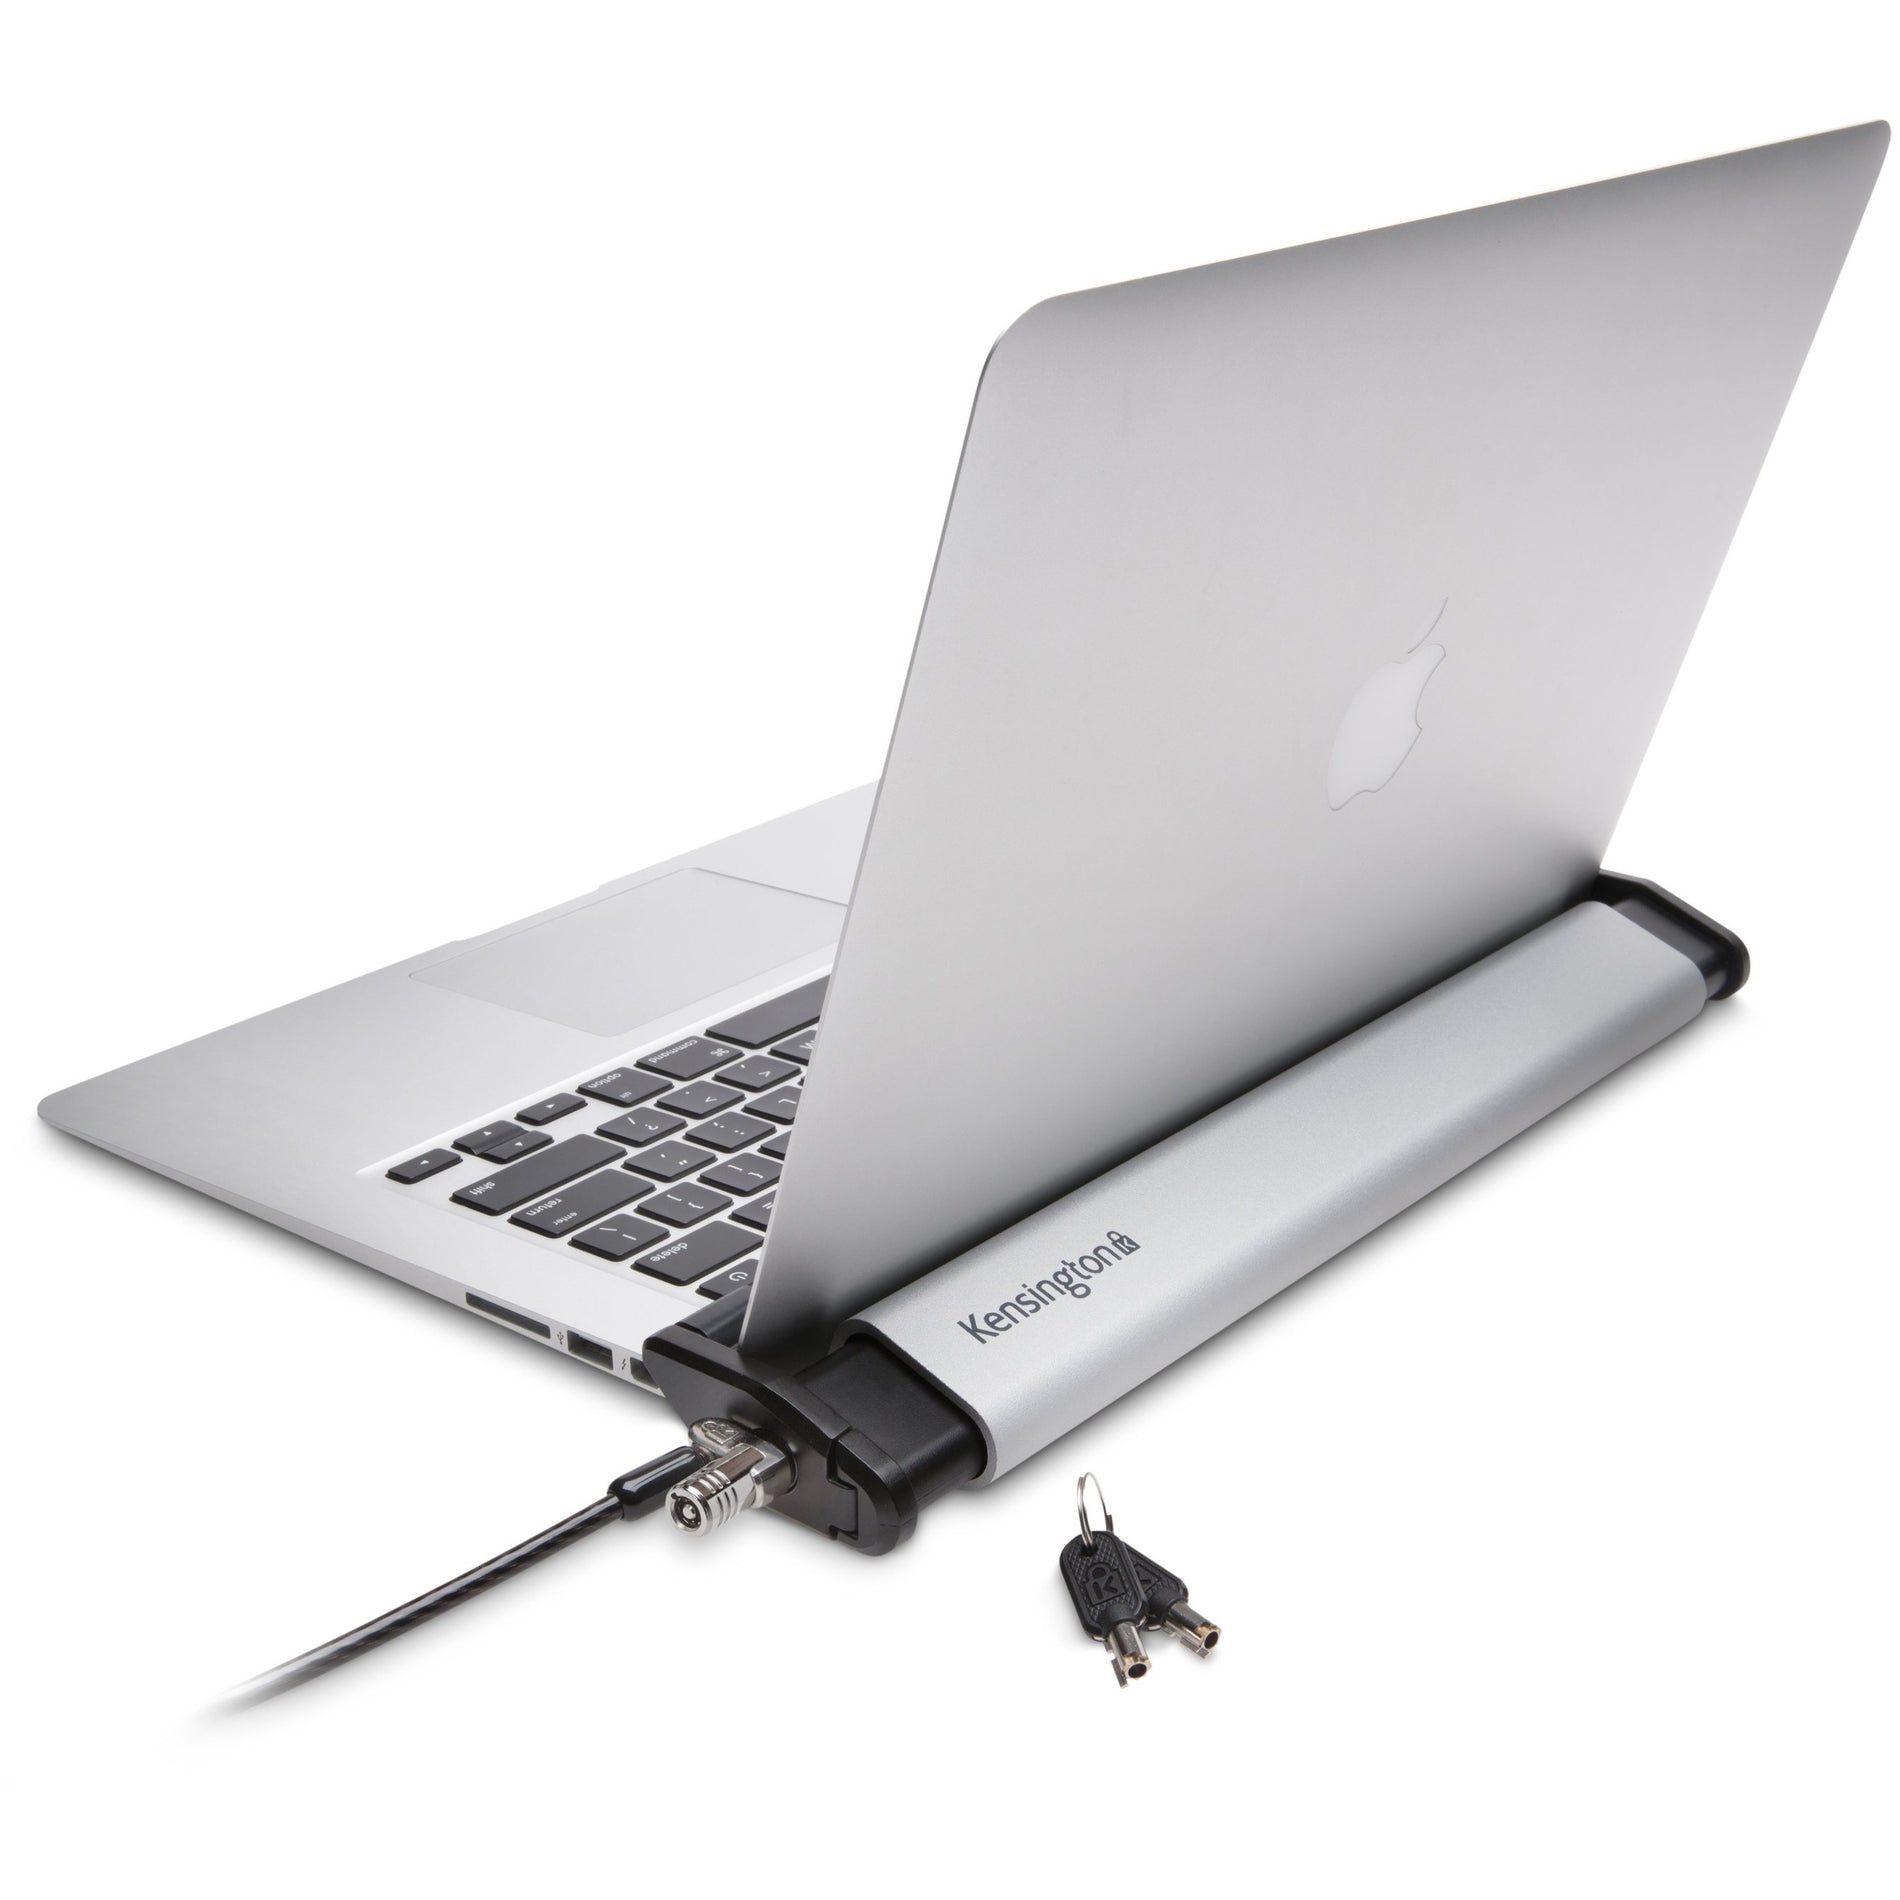 Kensington K64453WW Laptop Locking Station 2.0 with MicroSaver 2.0 Lock, Silver, 2-Year Warranty